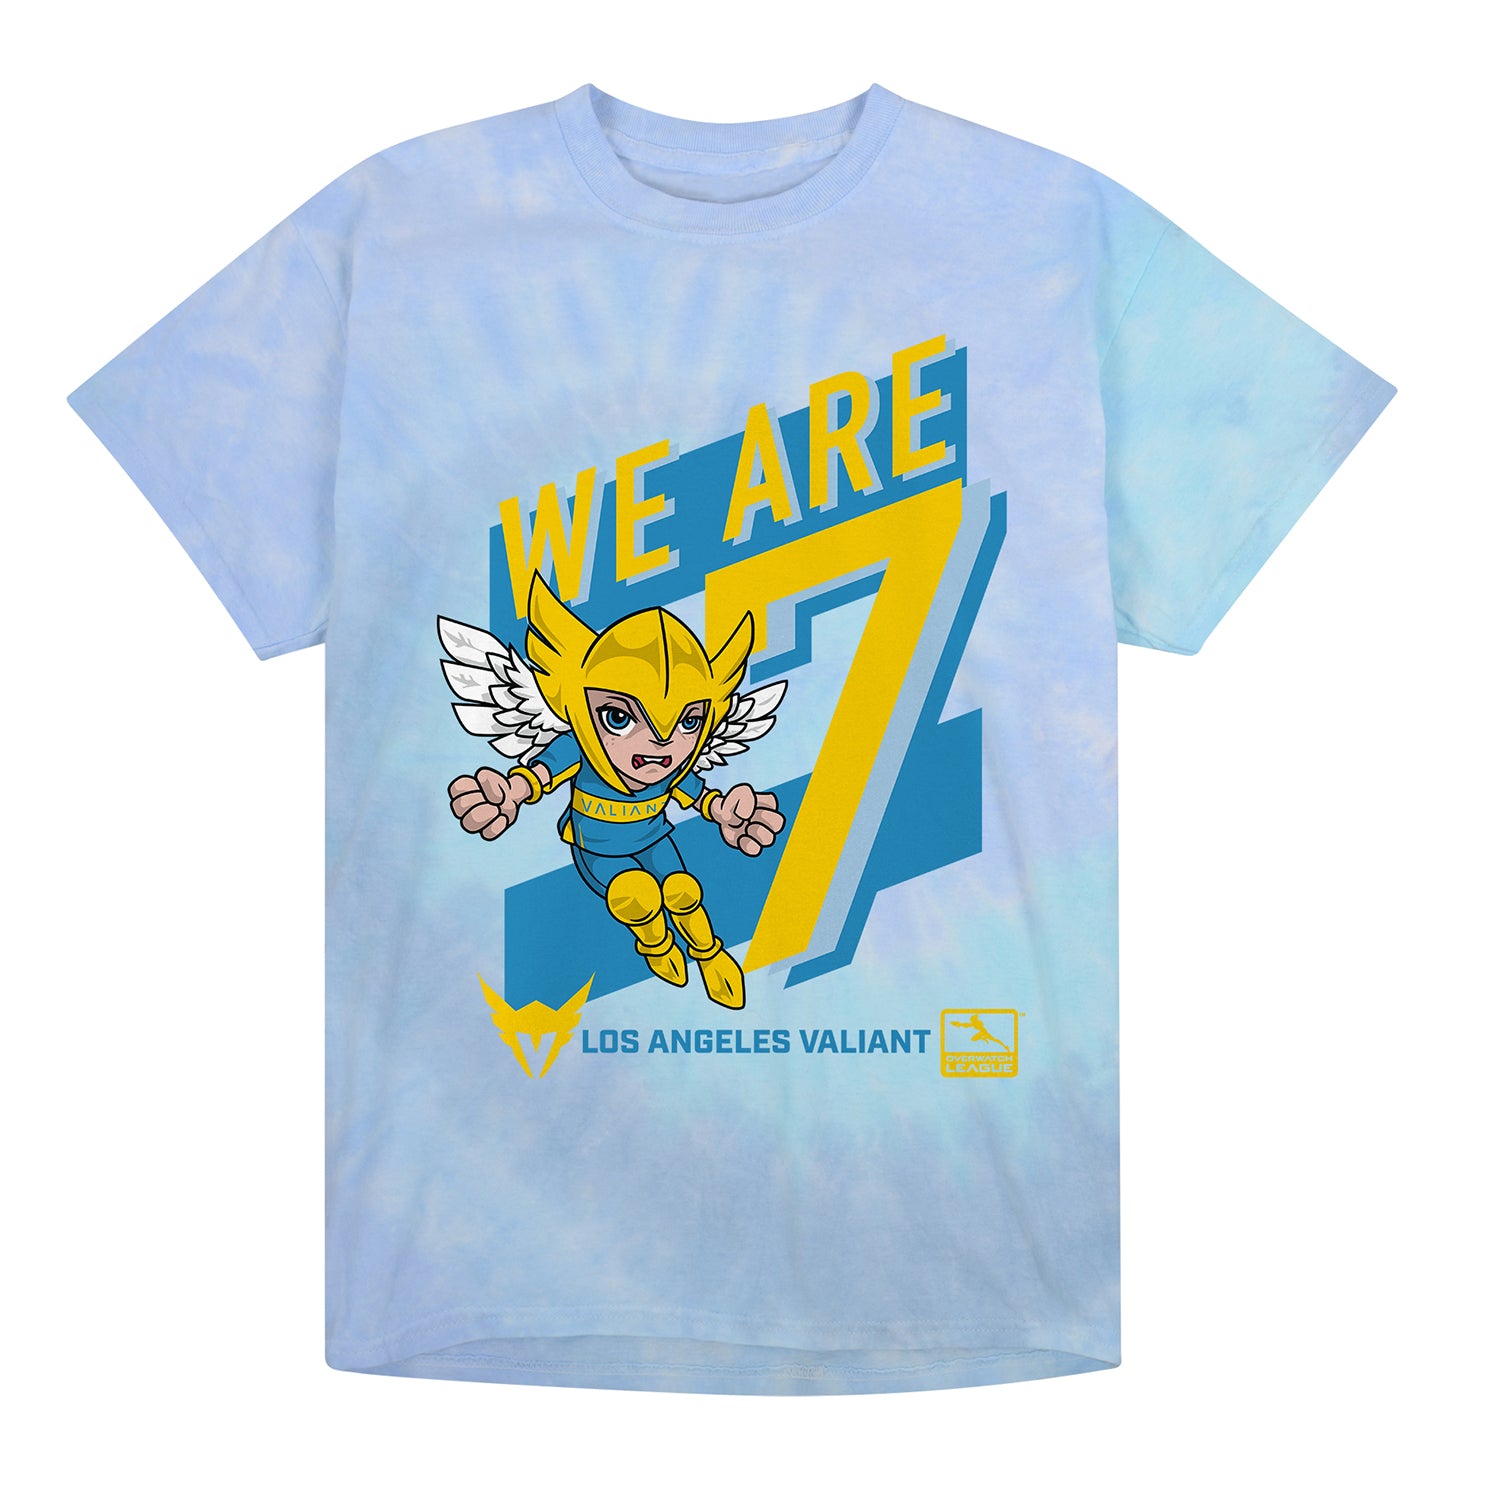 Los Angeles Valiant Tie-Dye Chibi Mascot T-Shirt - Front View